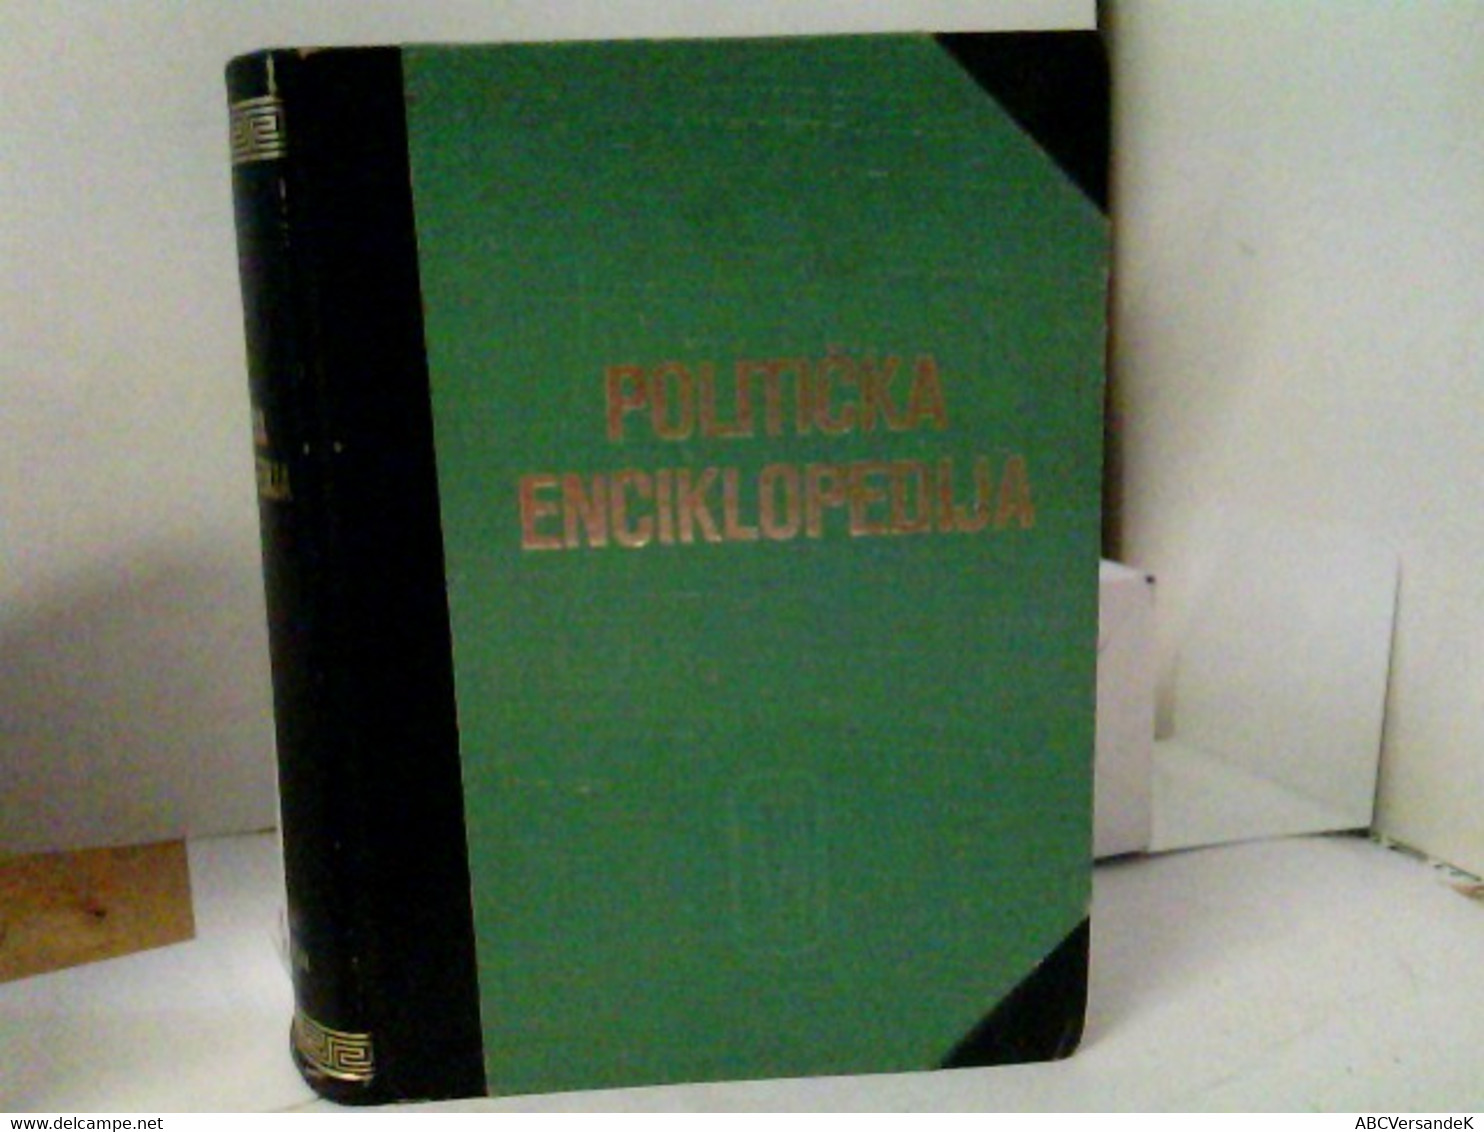 Politicka Enciklopedija - Lexika